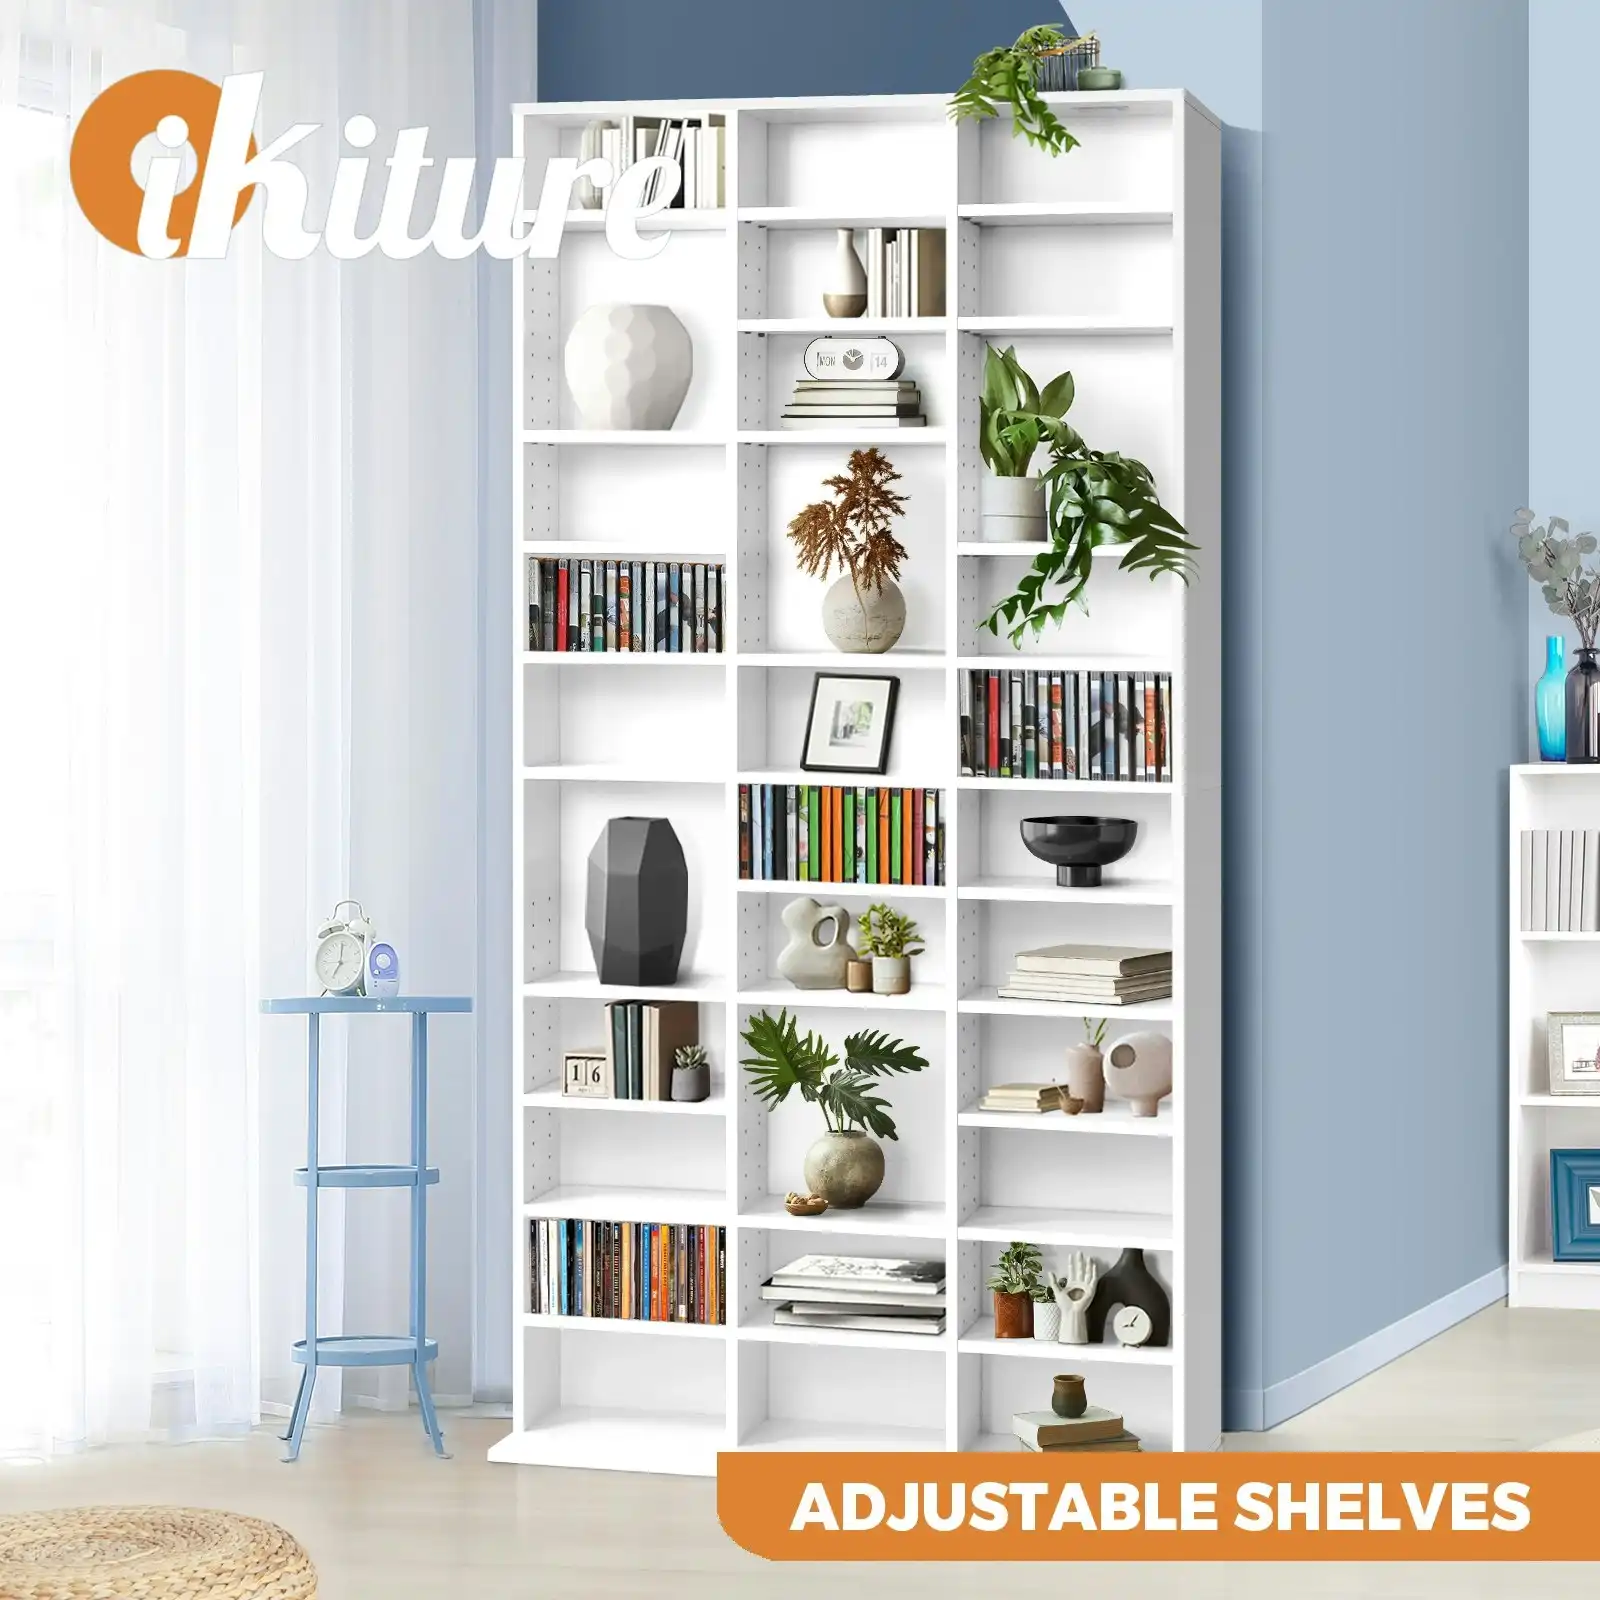 Oikiture Bookshelf Display Shelf Bookcase CD DVD Storage Media Stand Rack White